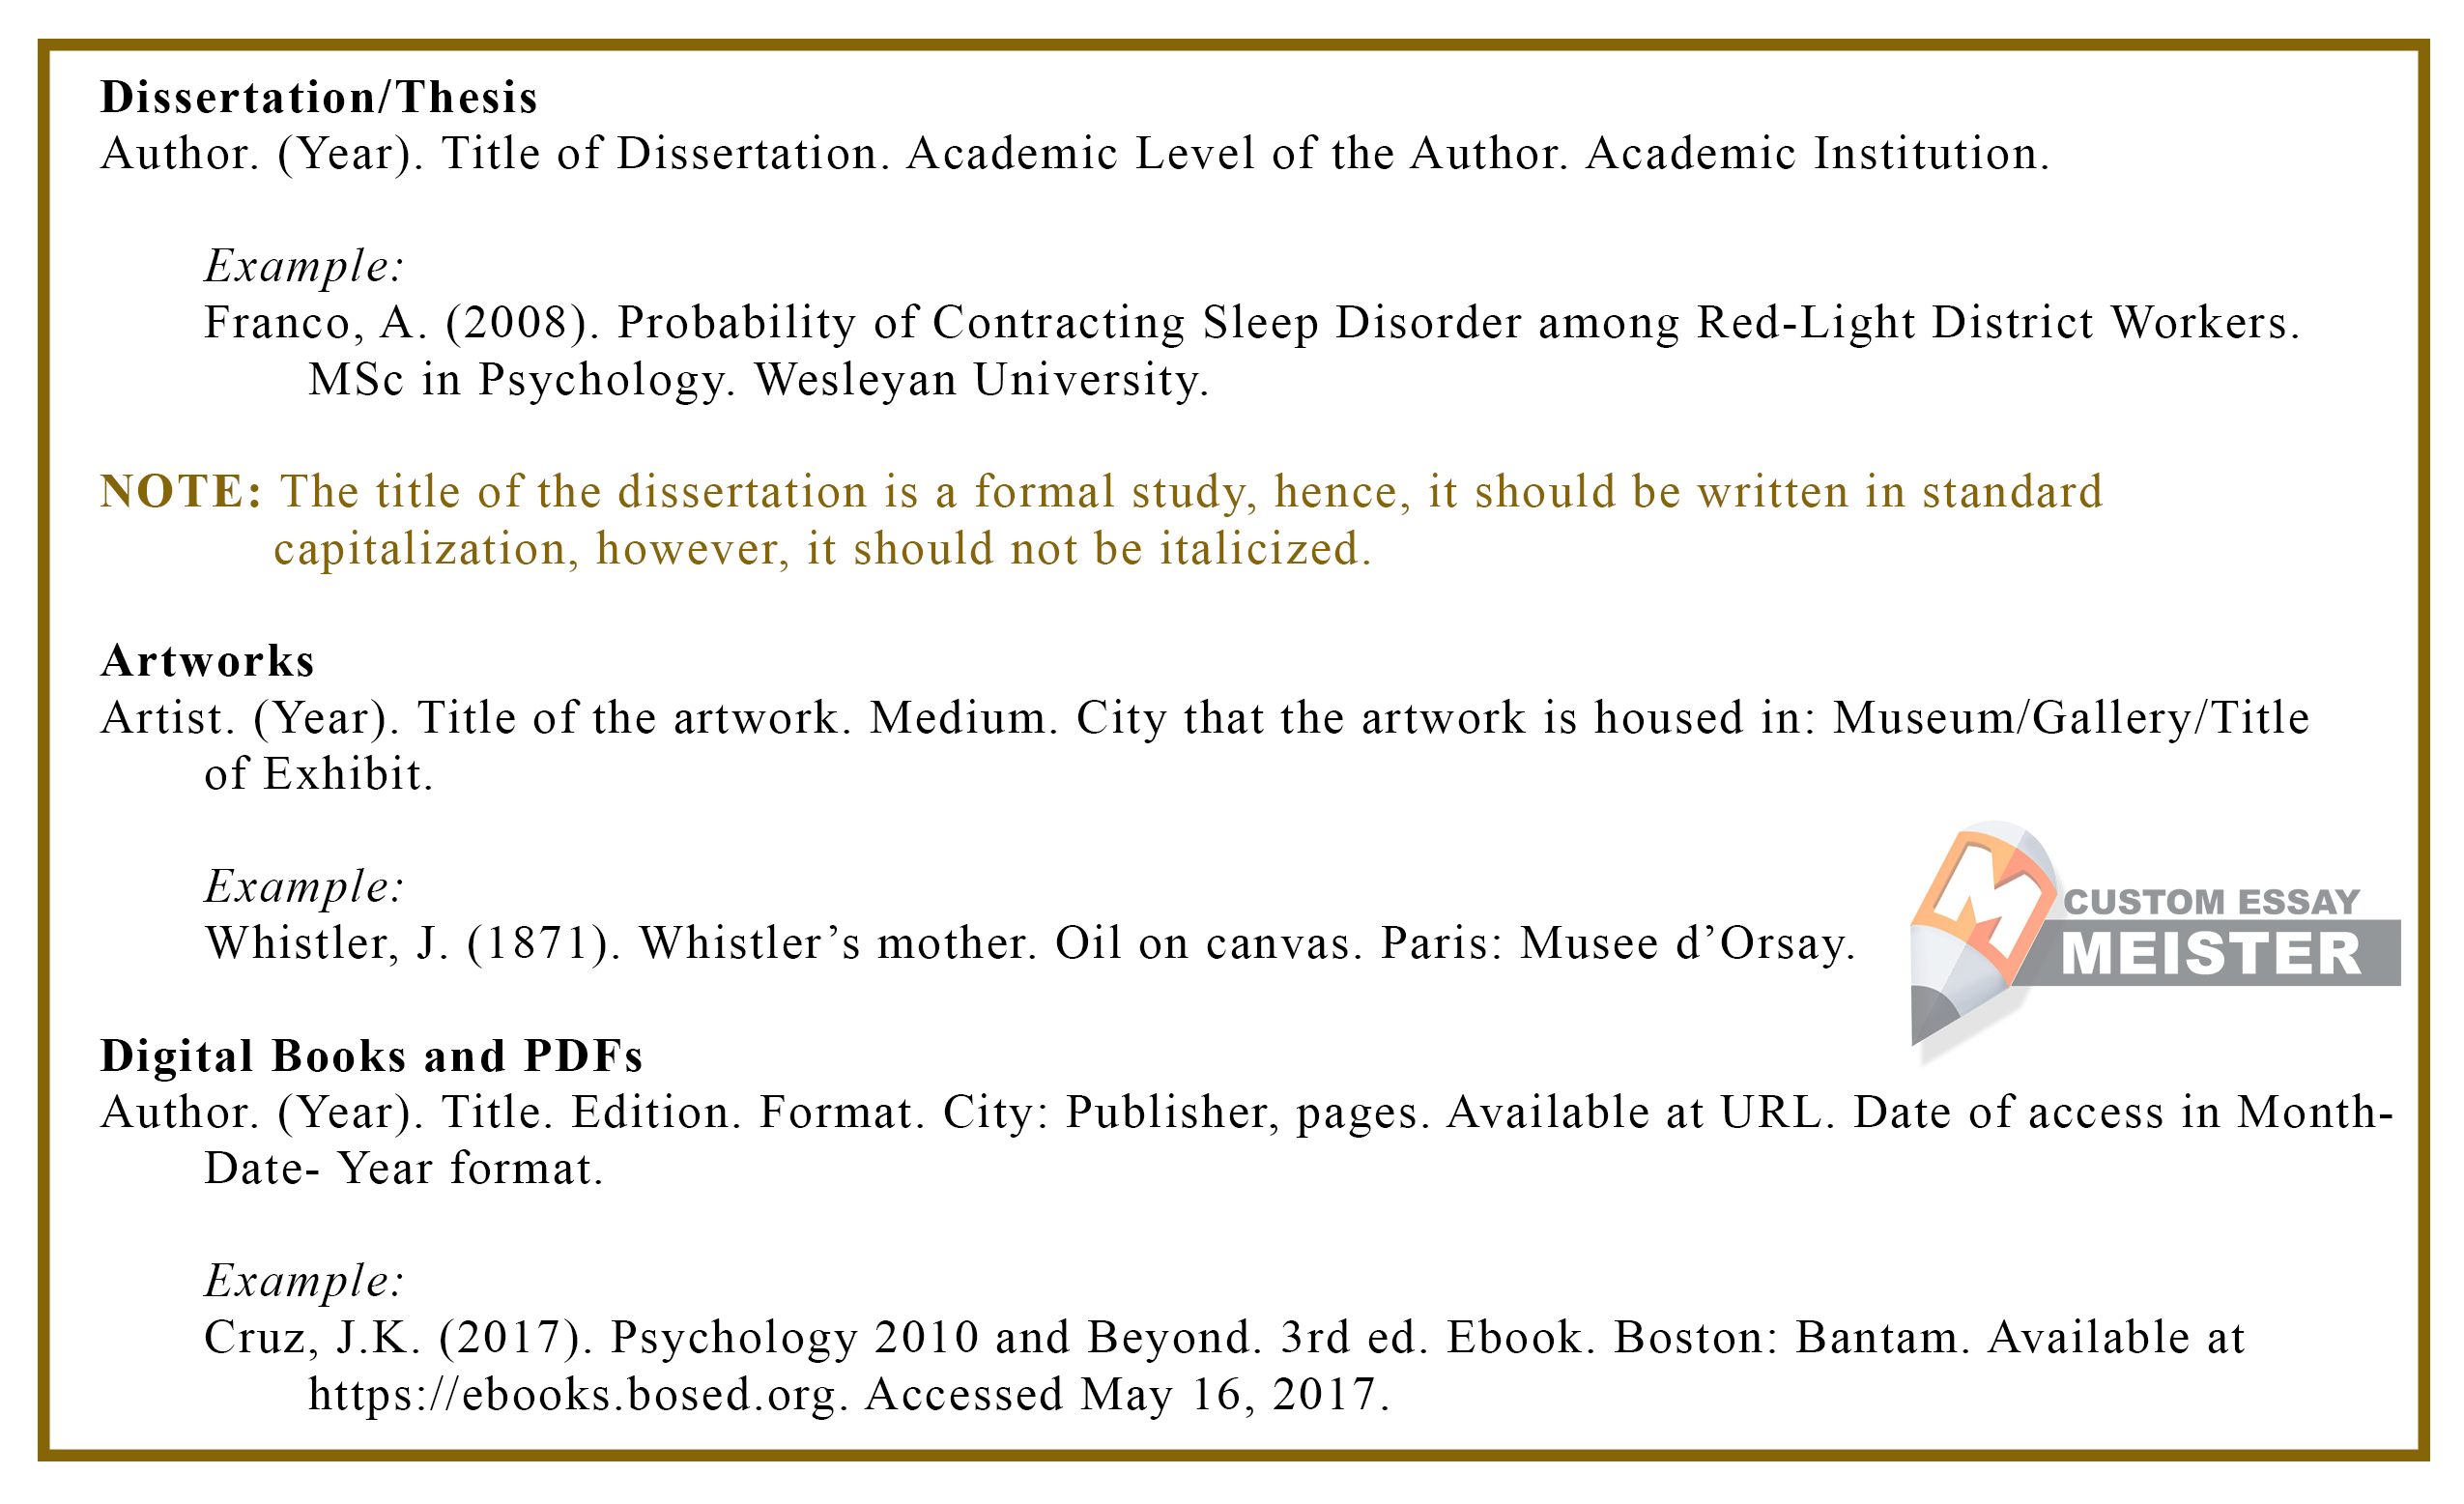 are dissertation titles italicized apa